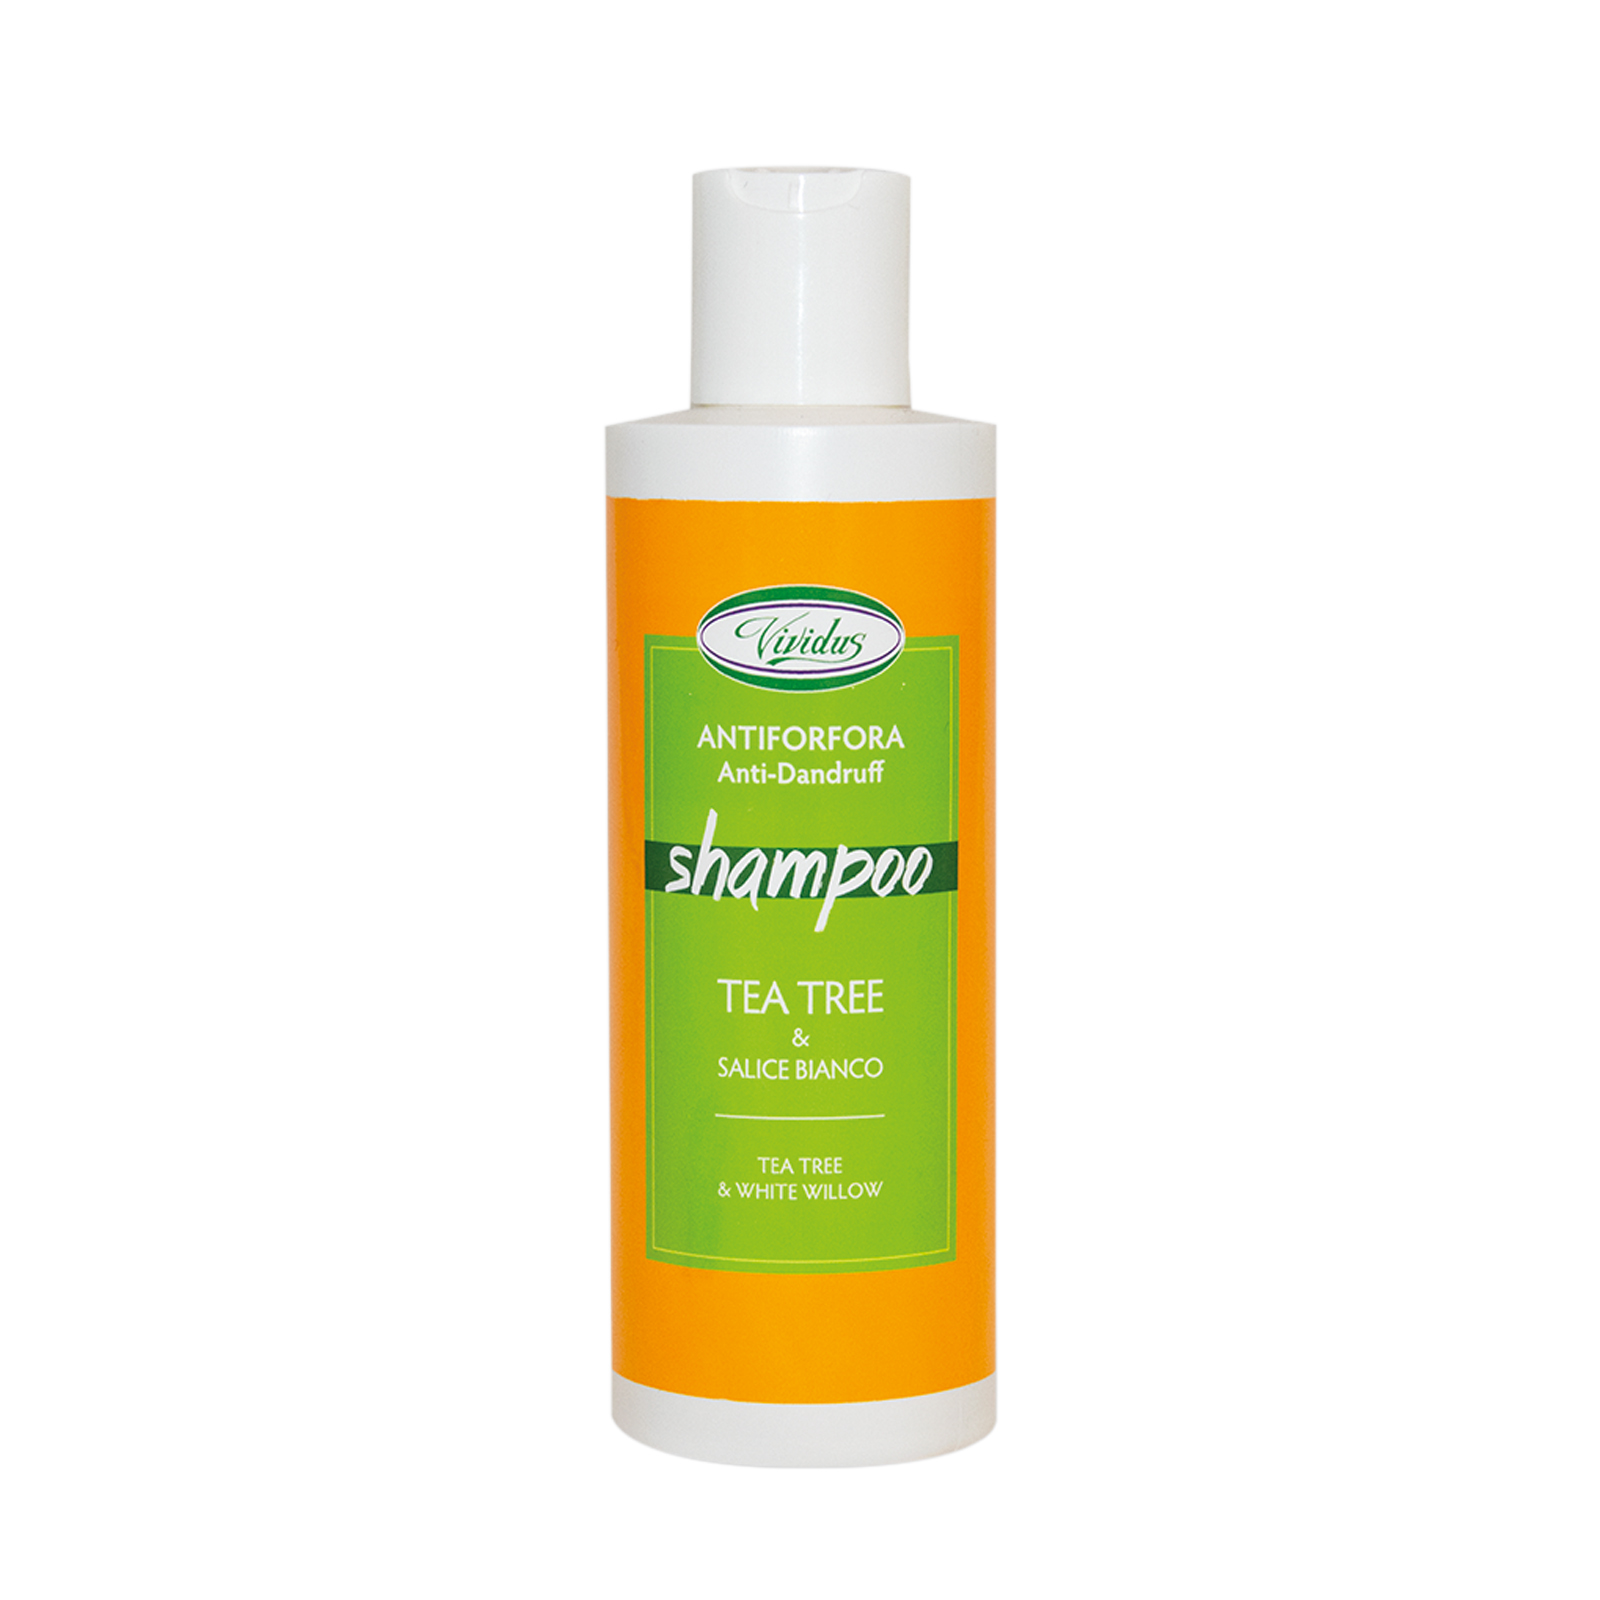 Tea Tree Shampoo Antiforfora